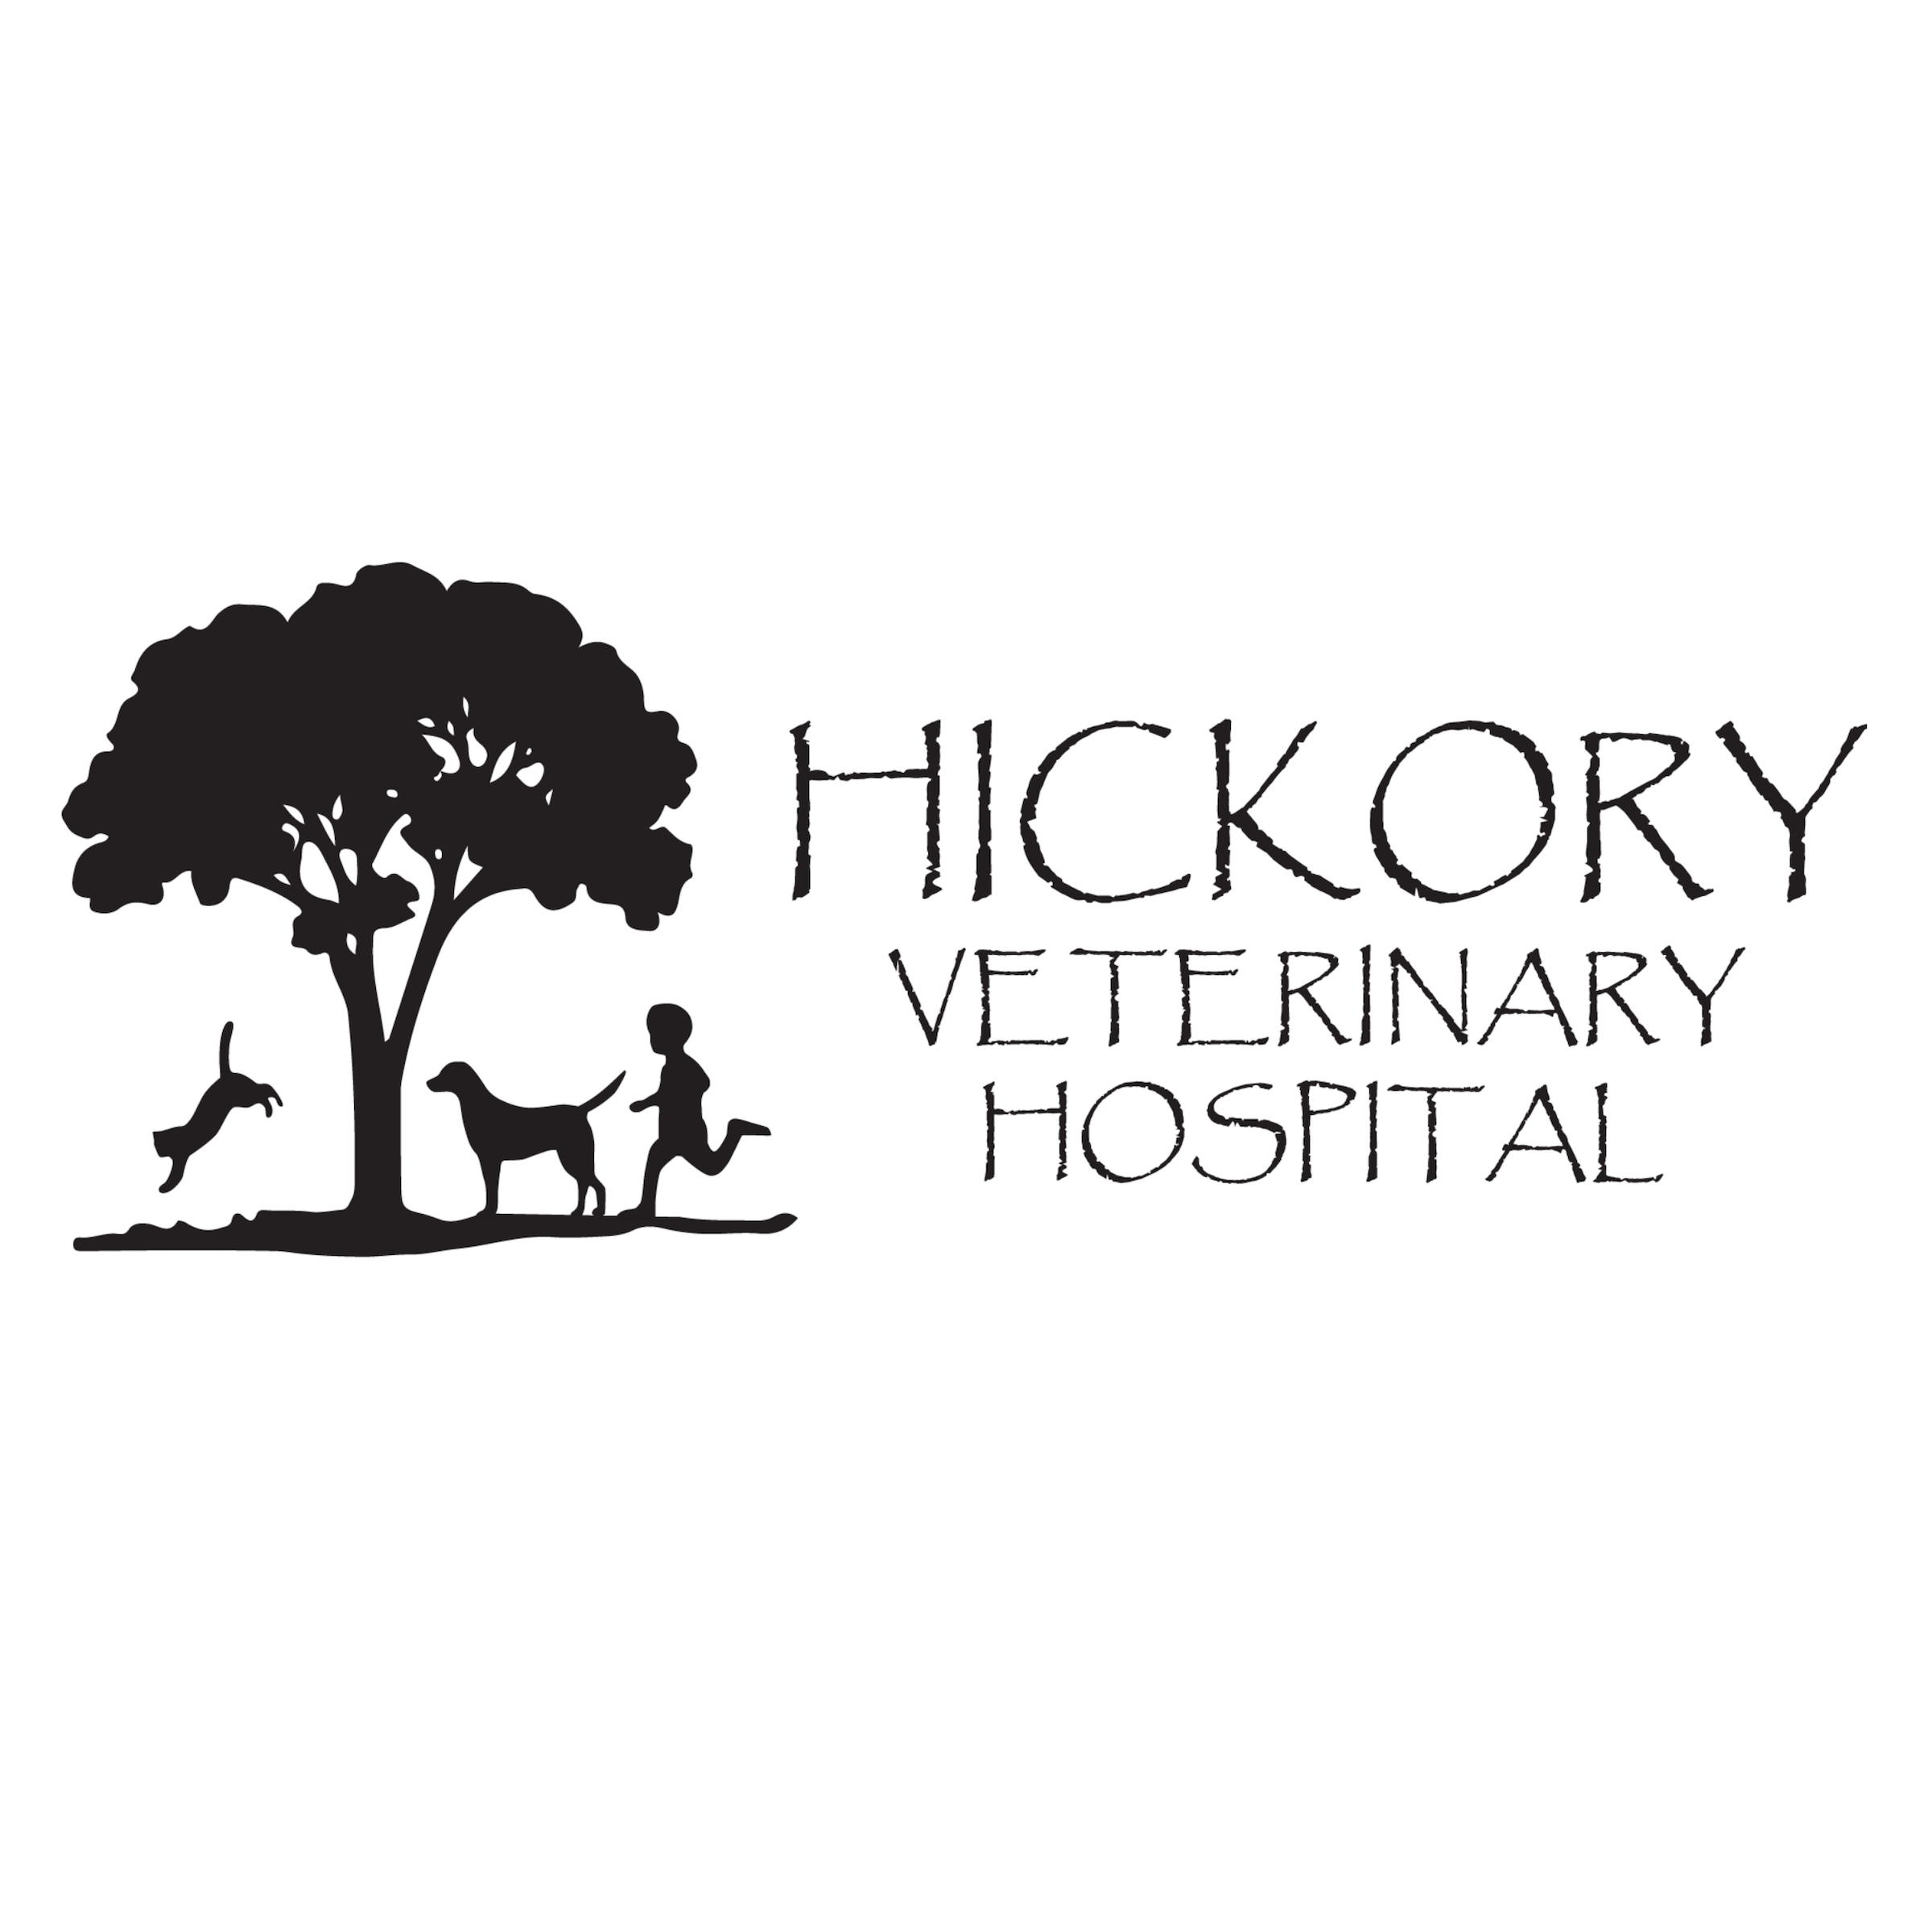 Hickory Veterinary Hospital - Chesapeake, VA 23322 - (757)548-1548 | ShowMeLocal.com